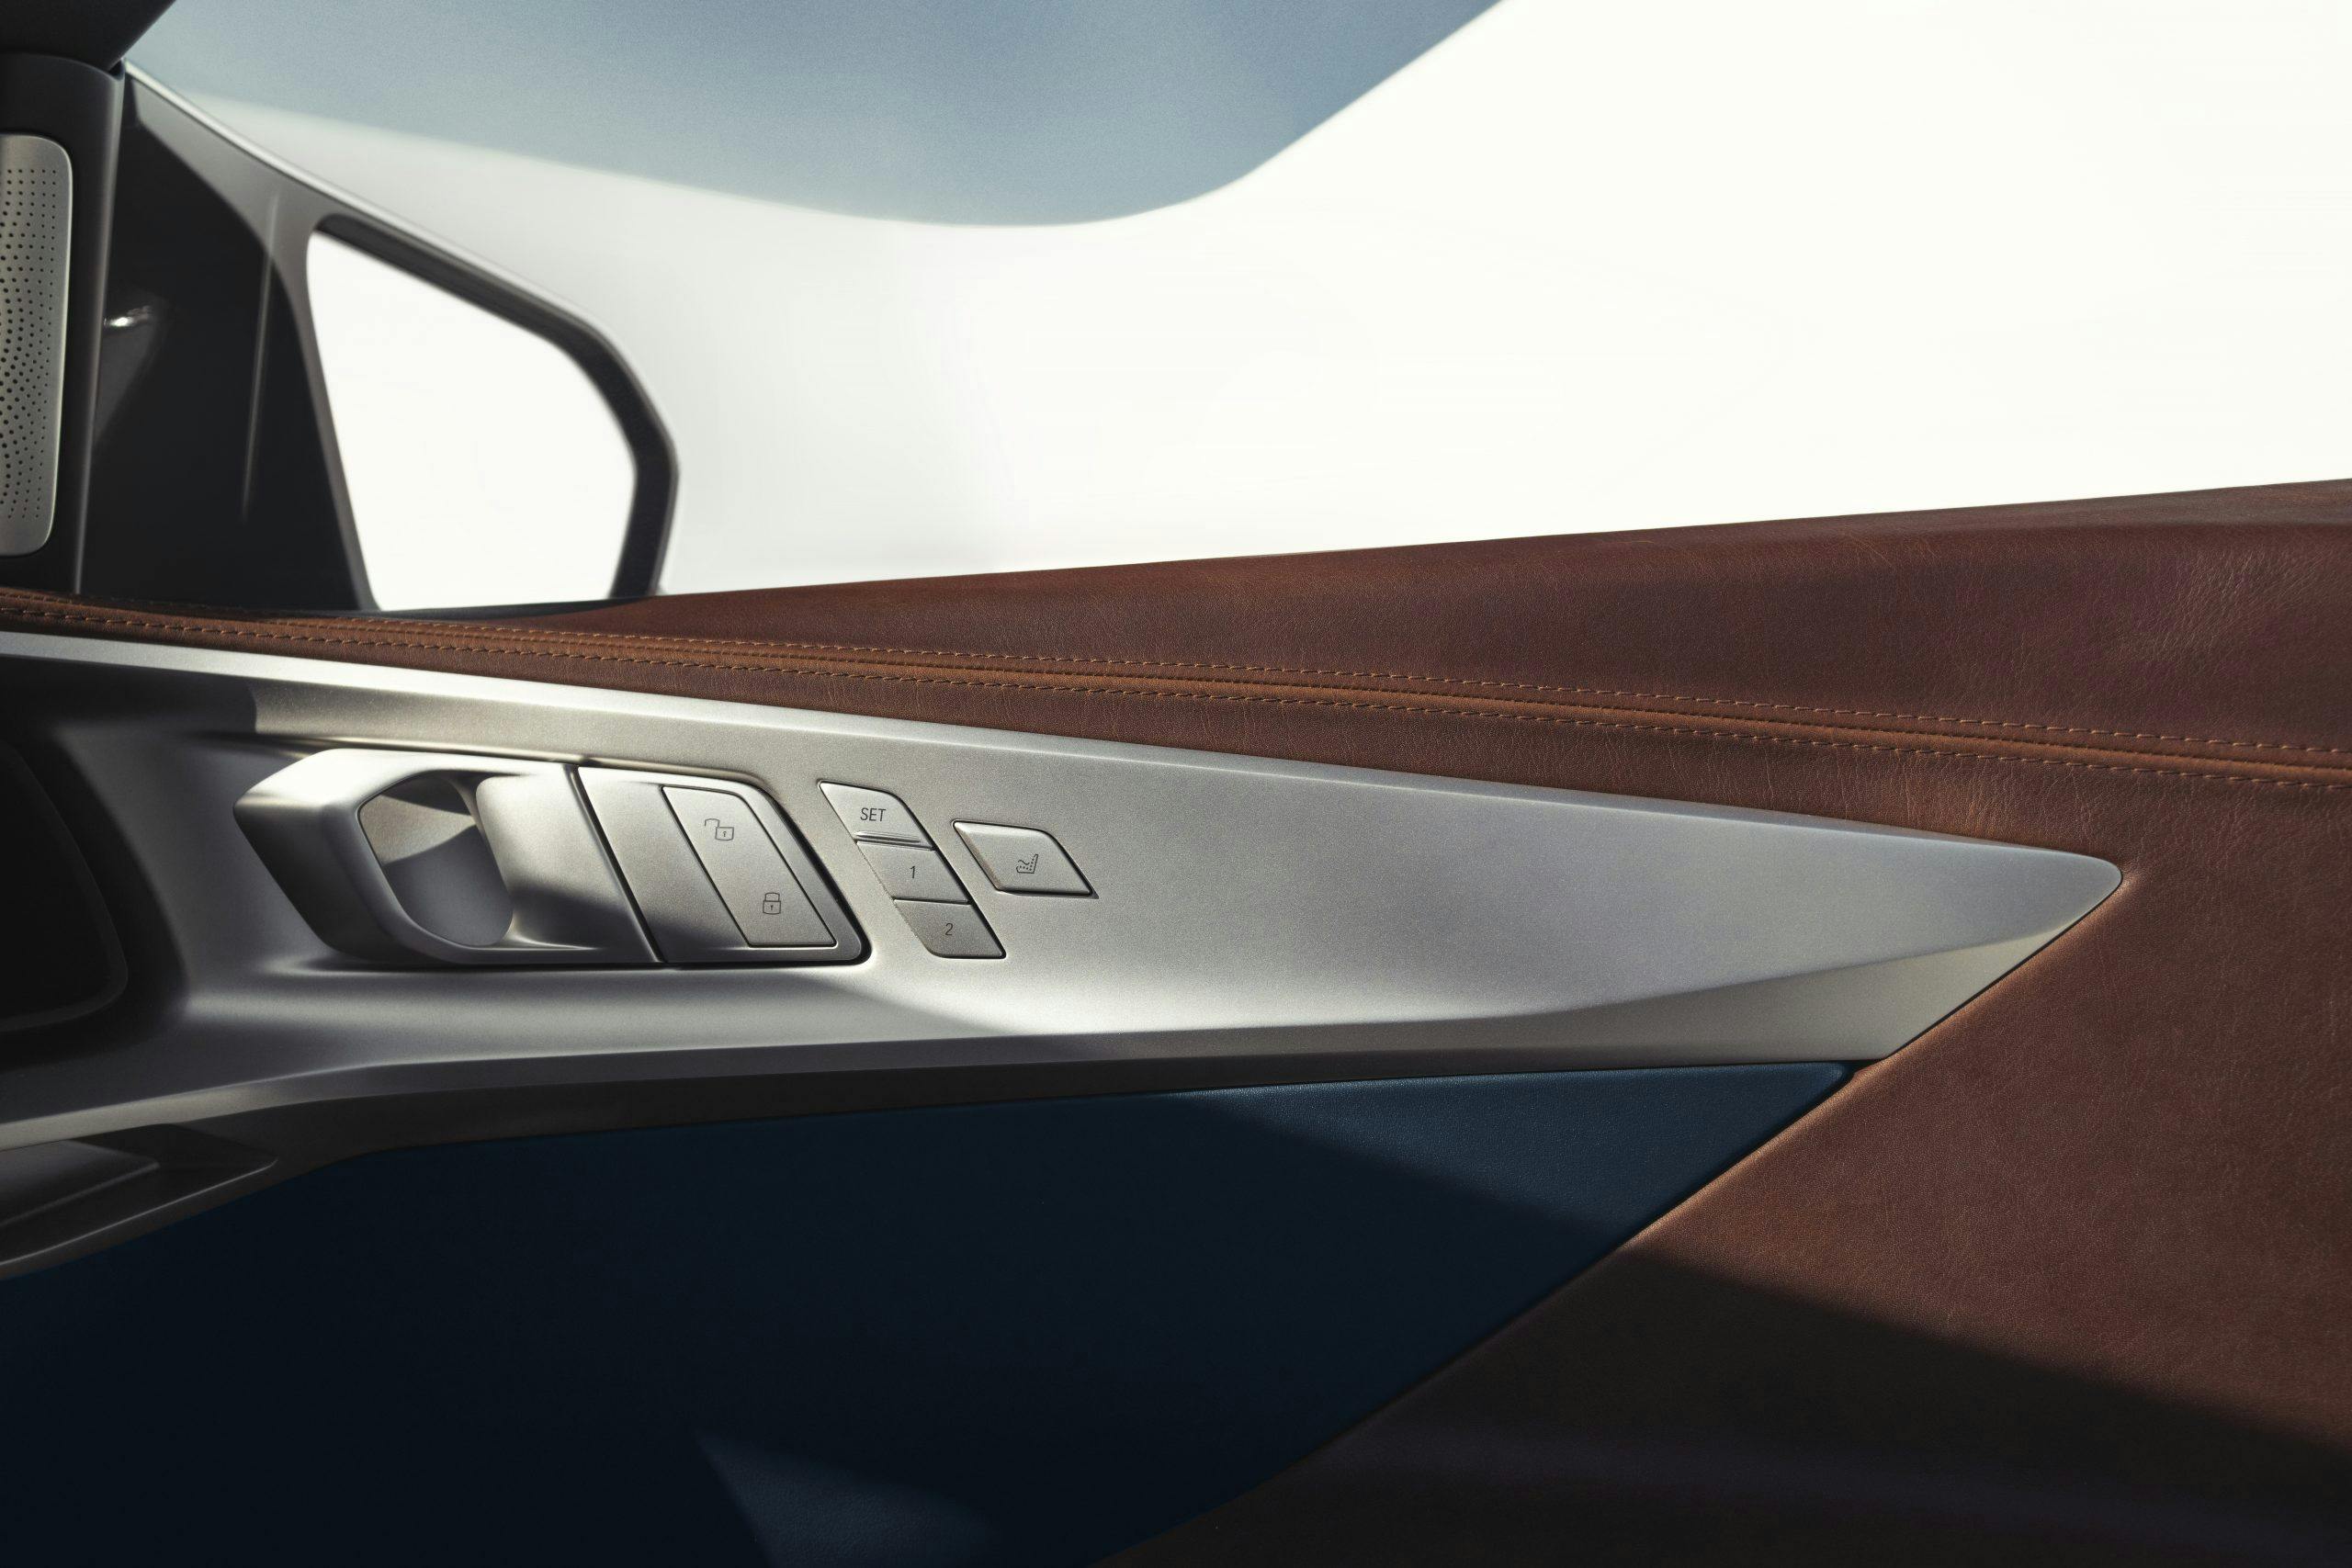 BMW XM concept interior detail